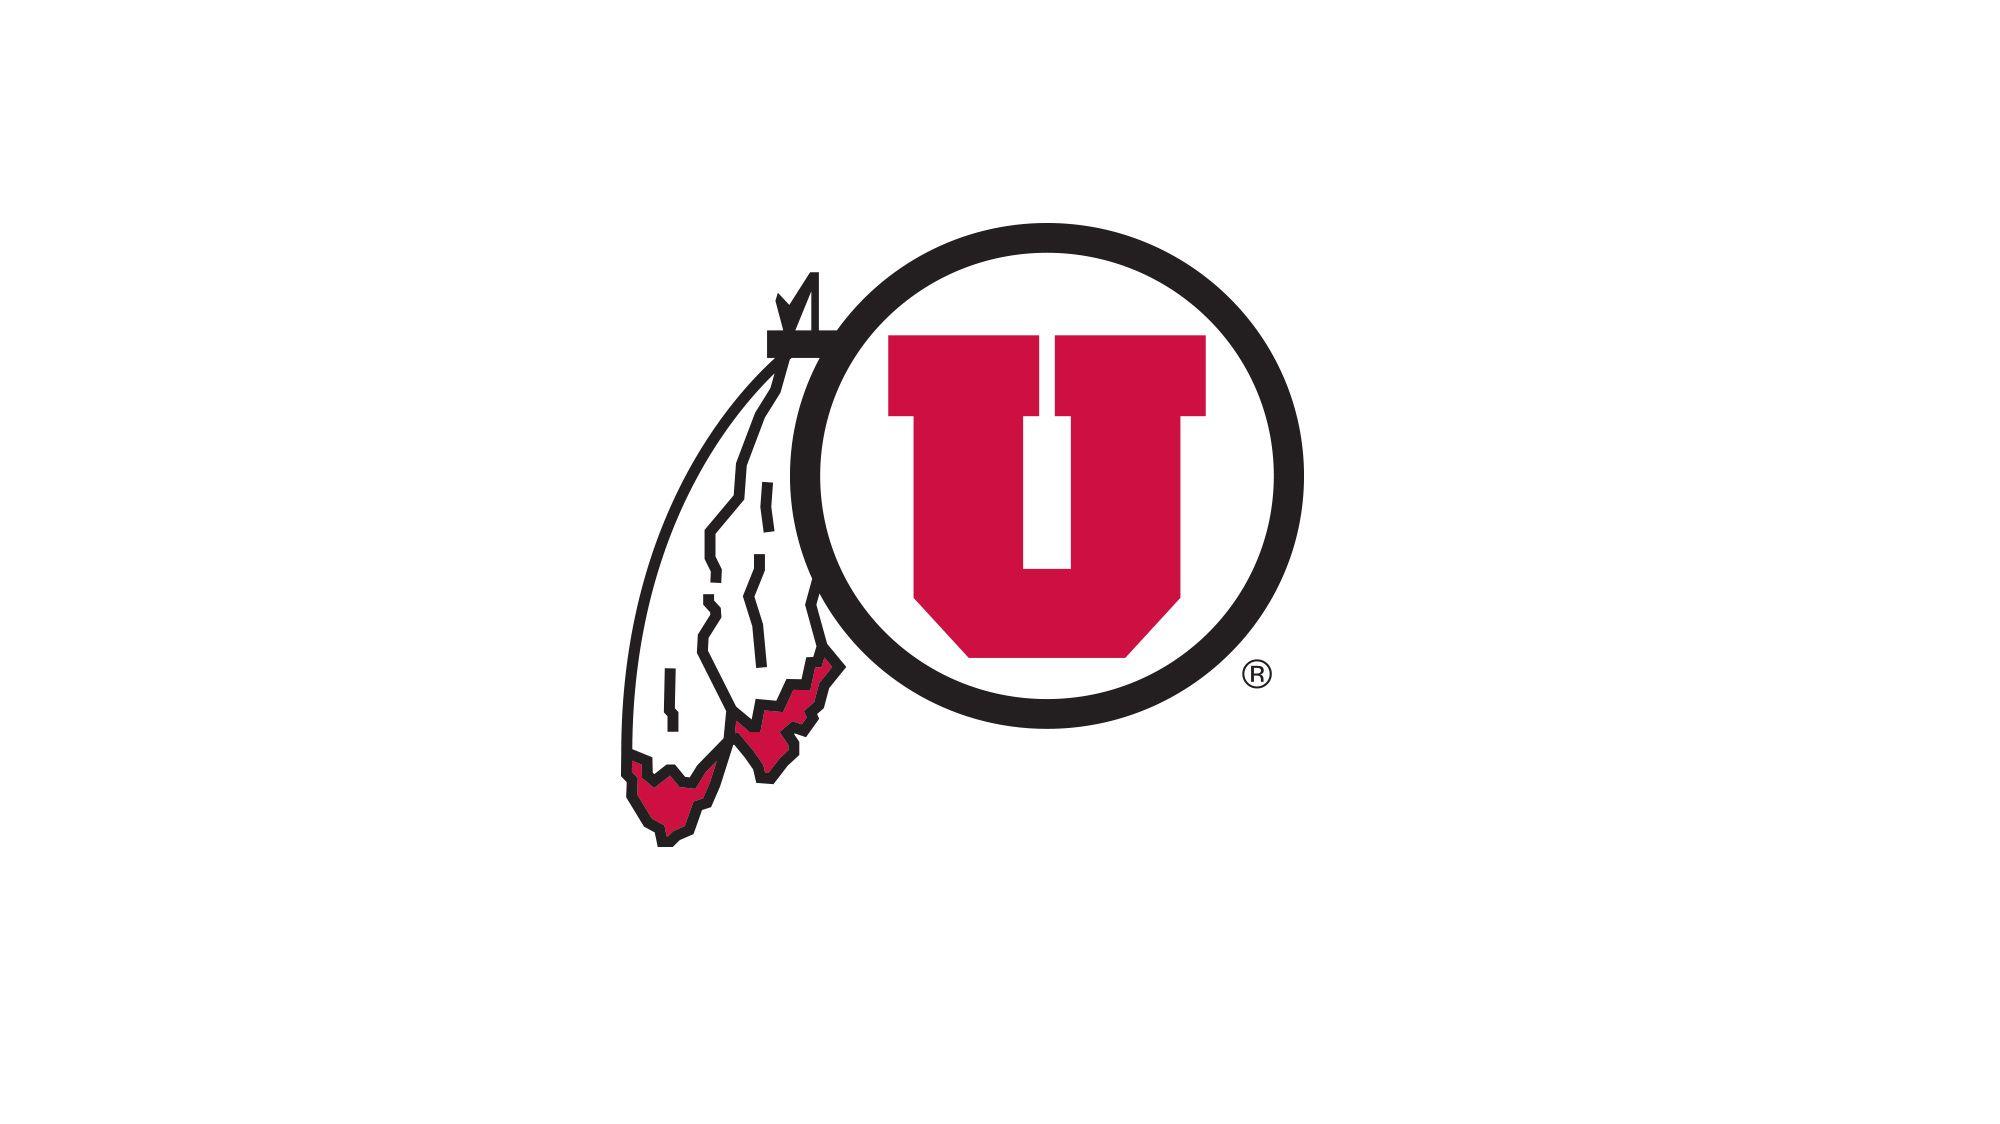 U of Utah Logo - Utah Athletics to Partner with Learfield - University of Utah Athletics